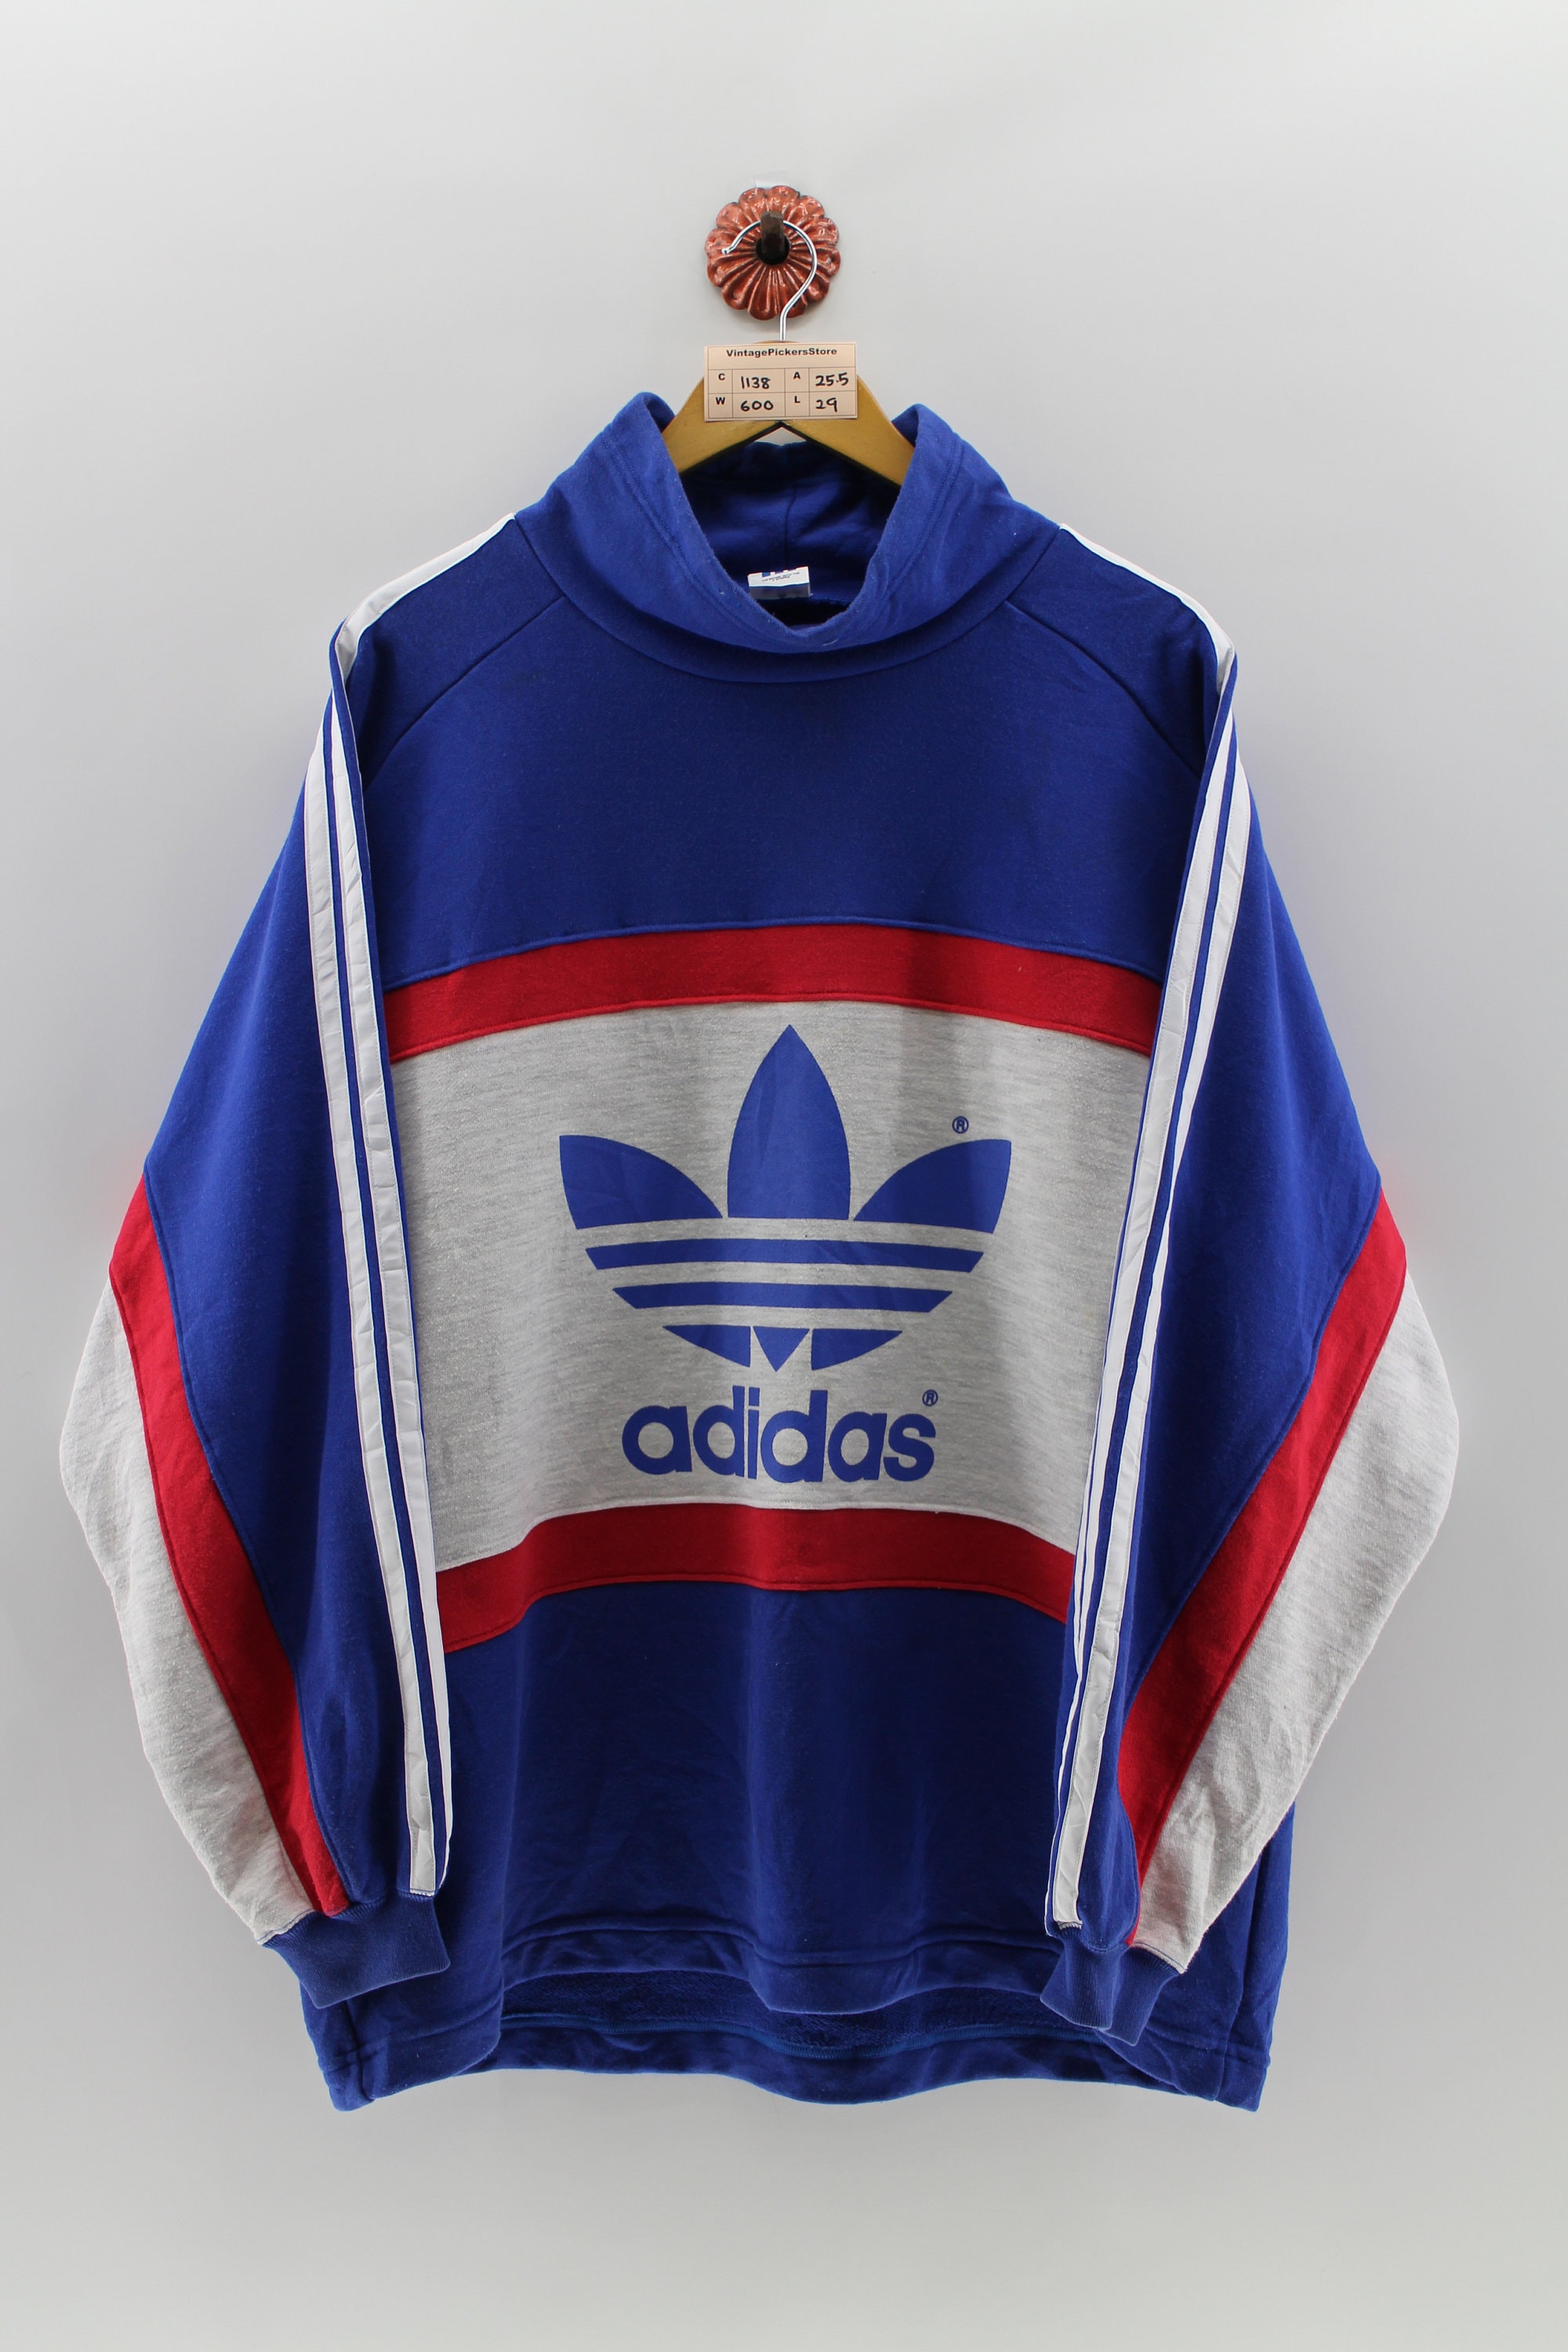 ADIDAS RUN DMC Sweatshirt XLarge Vintage 90's Adidas | Etsy